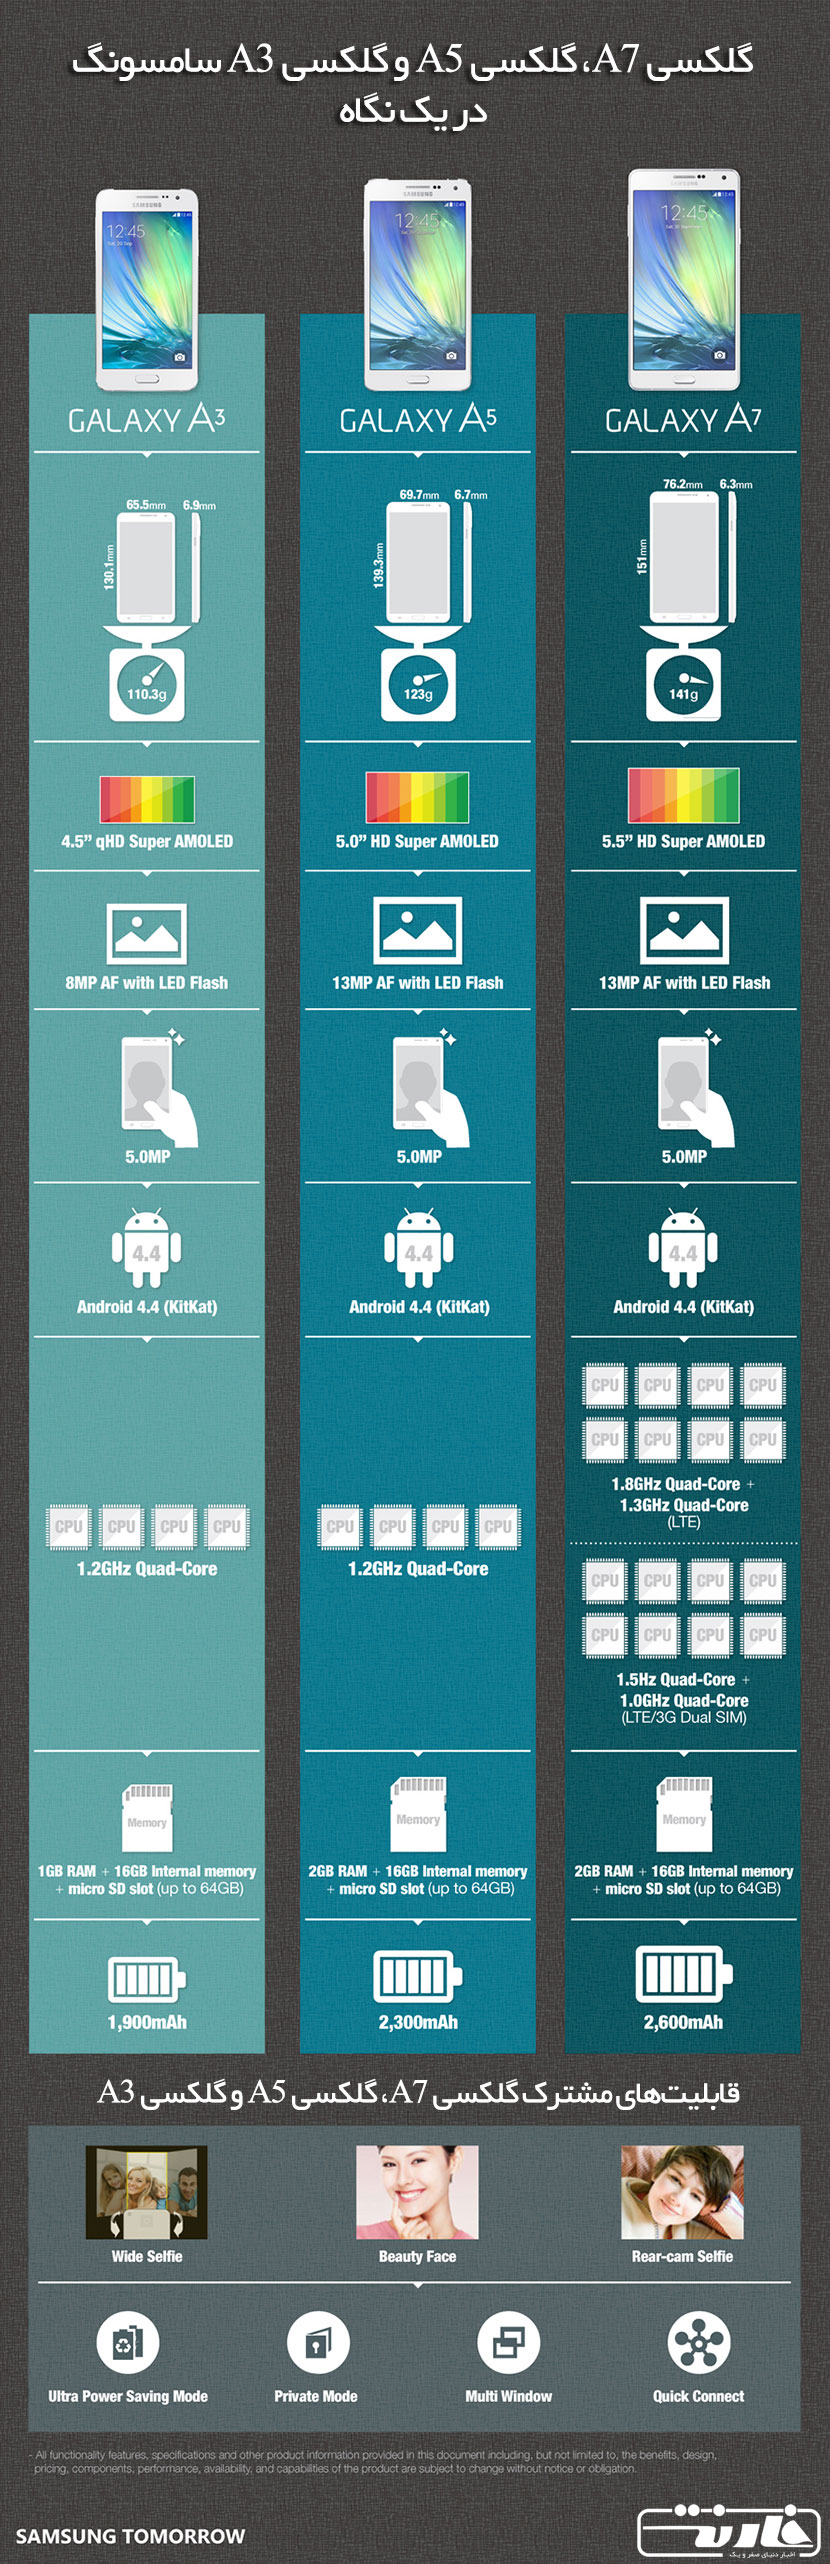 Samsung-Galaxy-A7-infographic